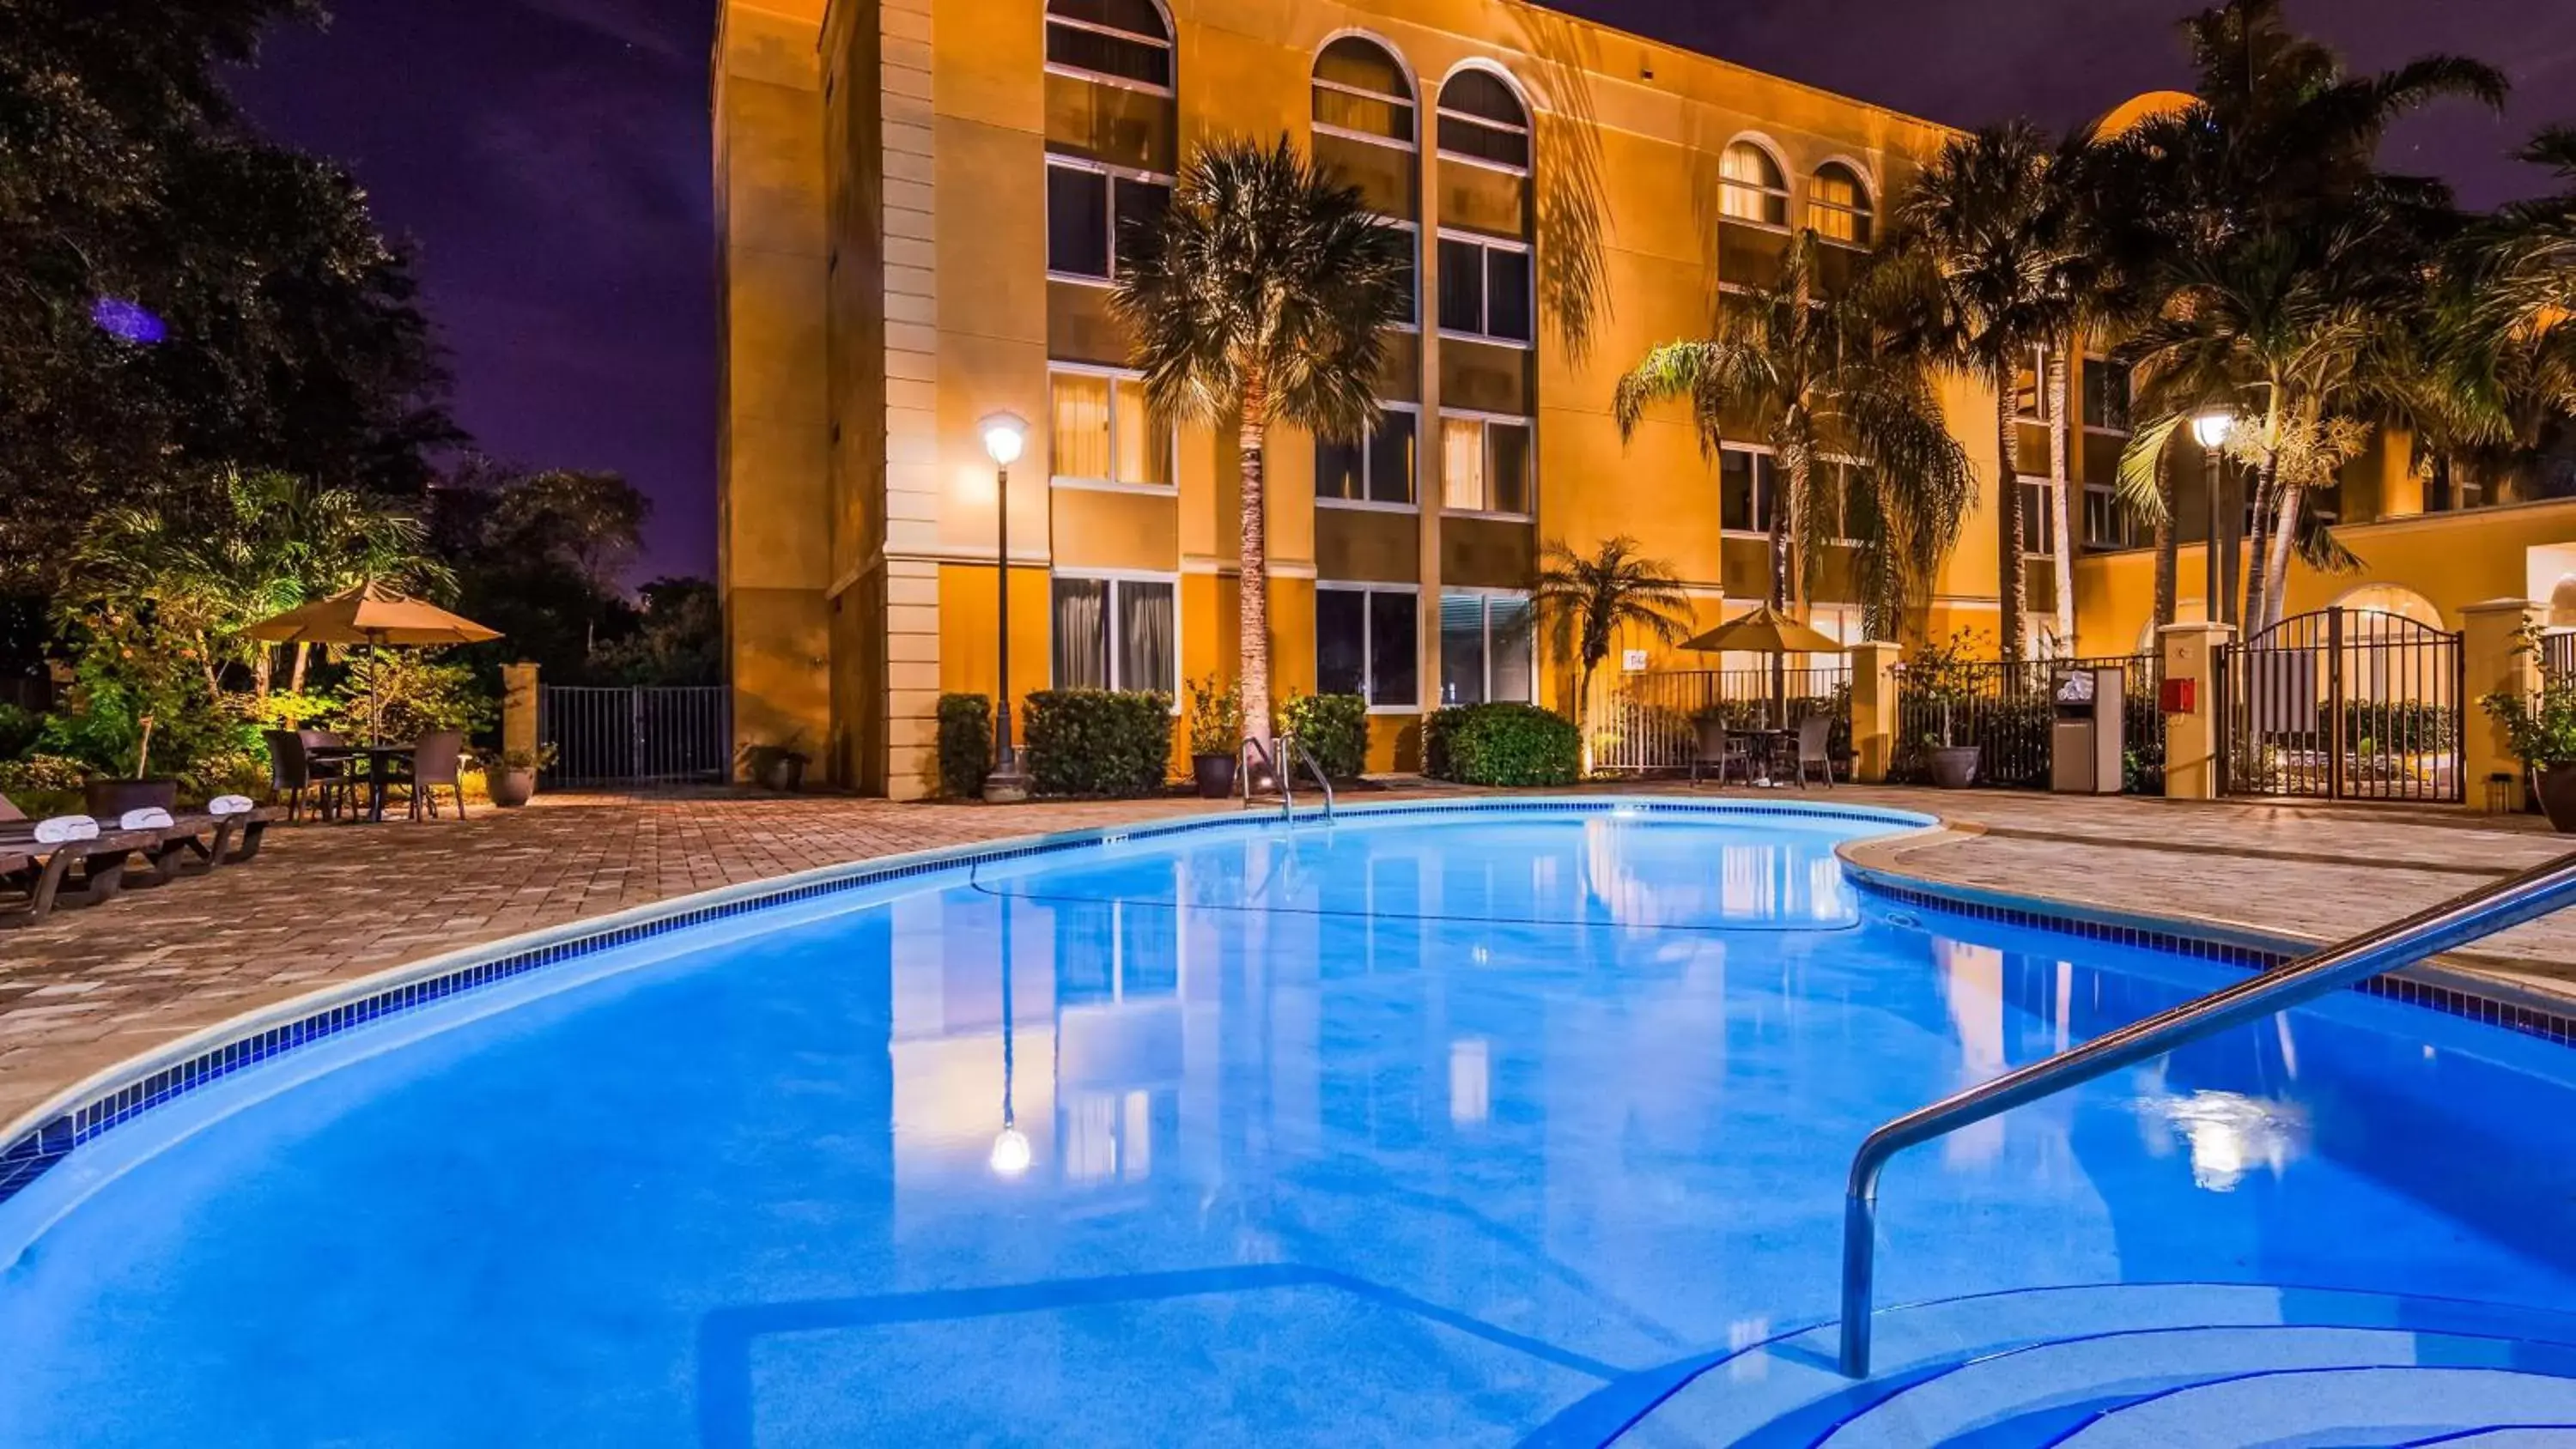 On site, Swimming Pool in Best Western Ft Lauderdale I-95 Inn